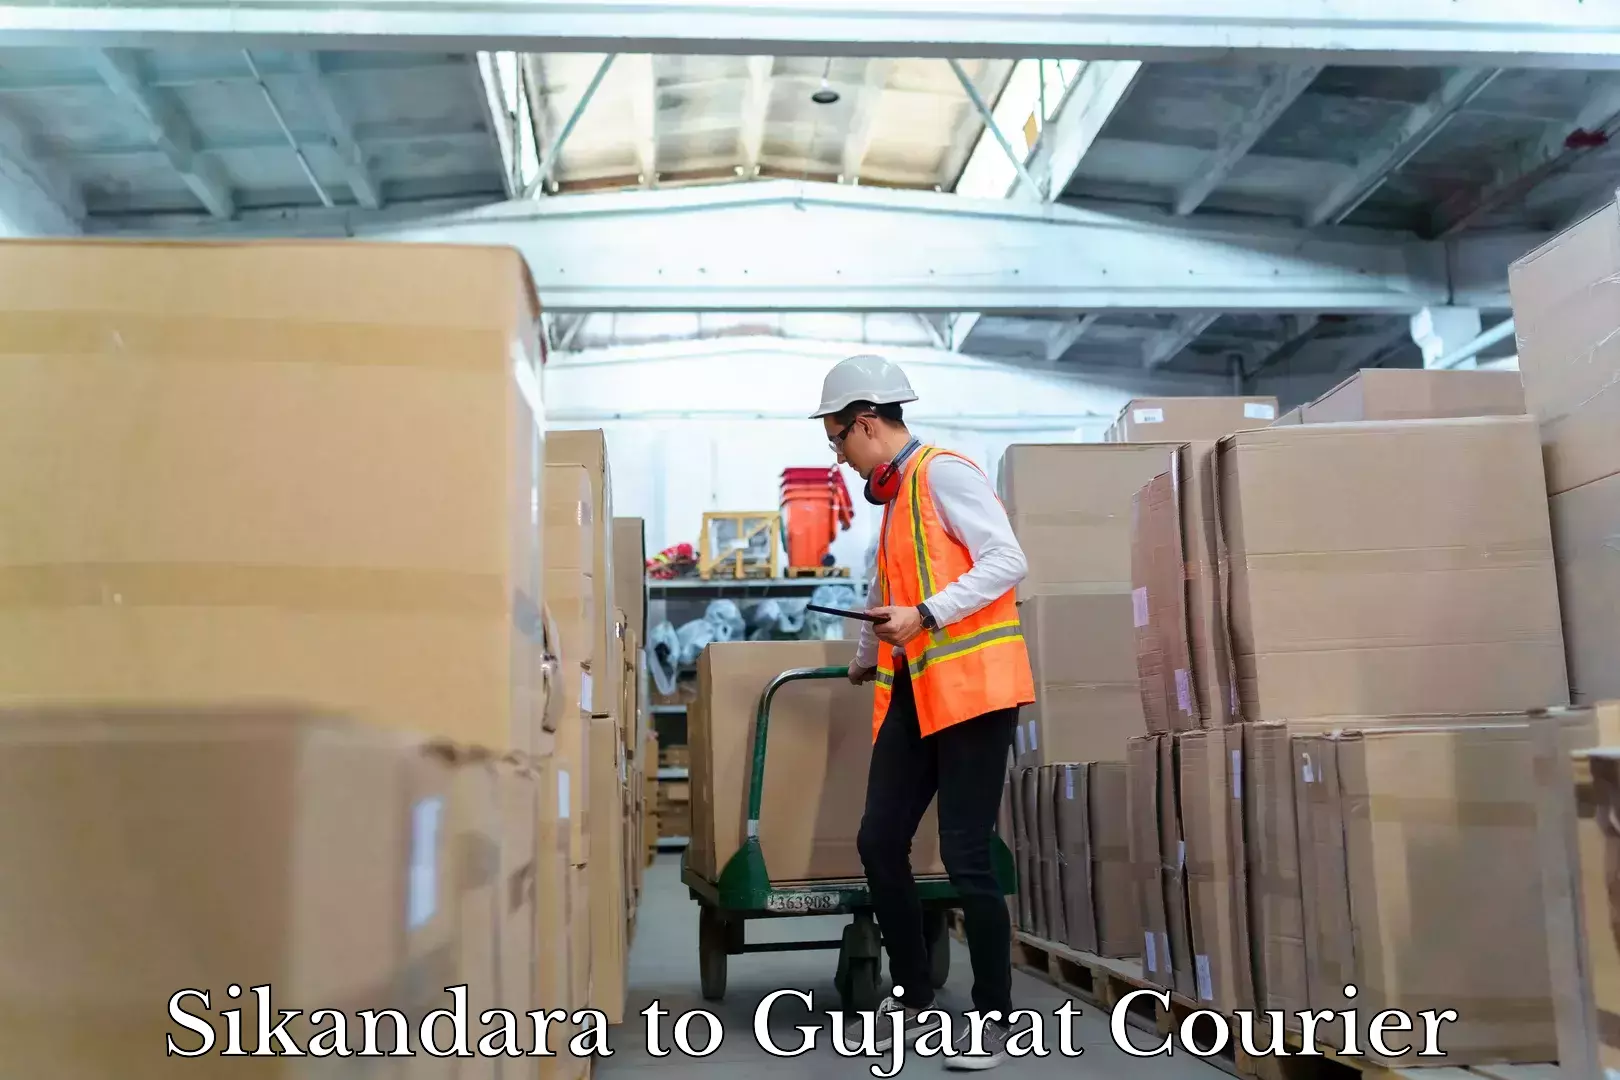 Professional courier handling Sikandara to Gujarat